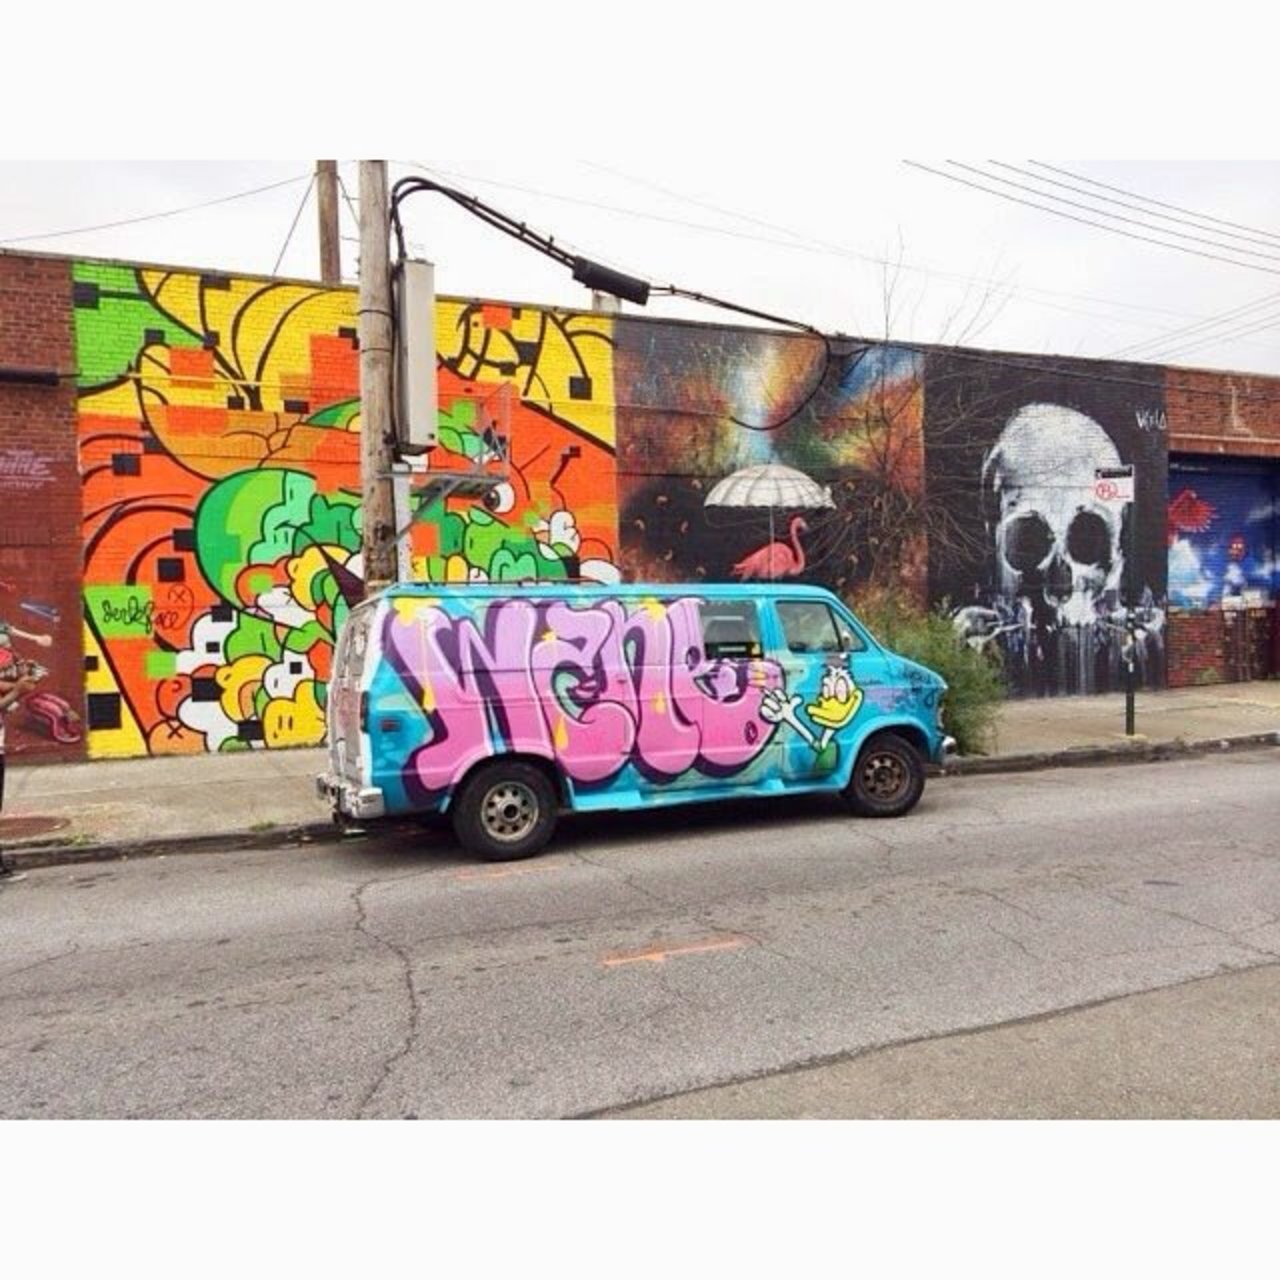 I saw this van in #brooklyn . Does anyone know of the #artist ? #streetart #graffiti https://t.co/hRZ1enho1y